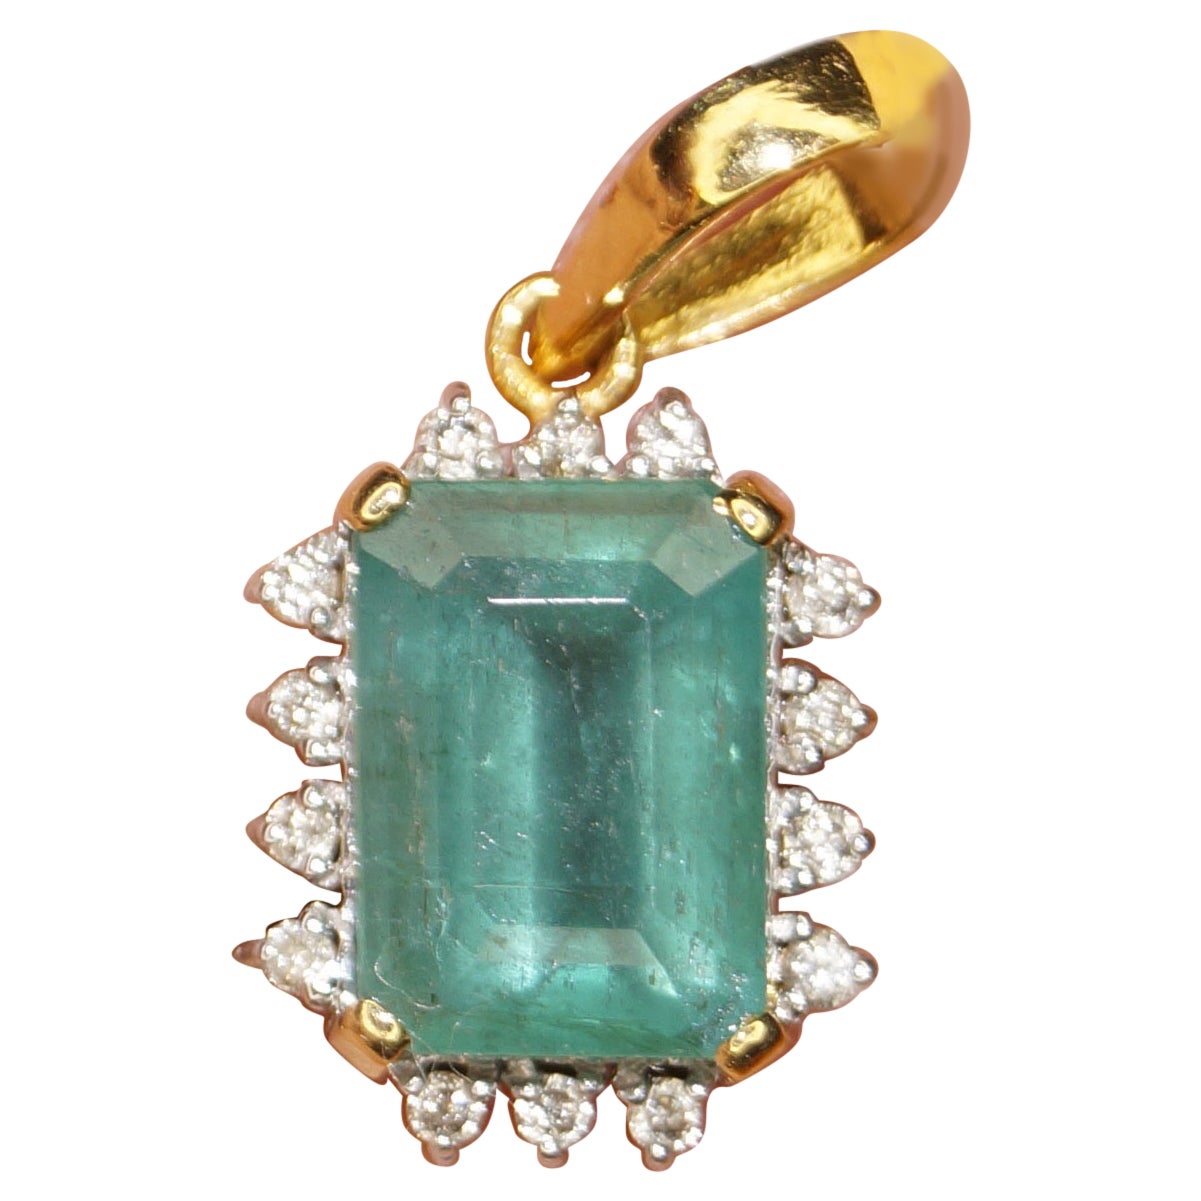 IGI Certified Natural Diamond Emerald Pendant Hallmark 18K Gold Pendant